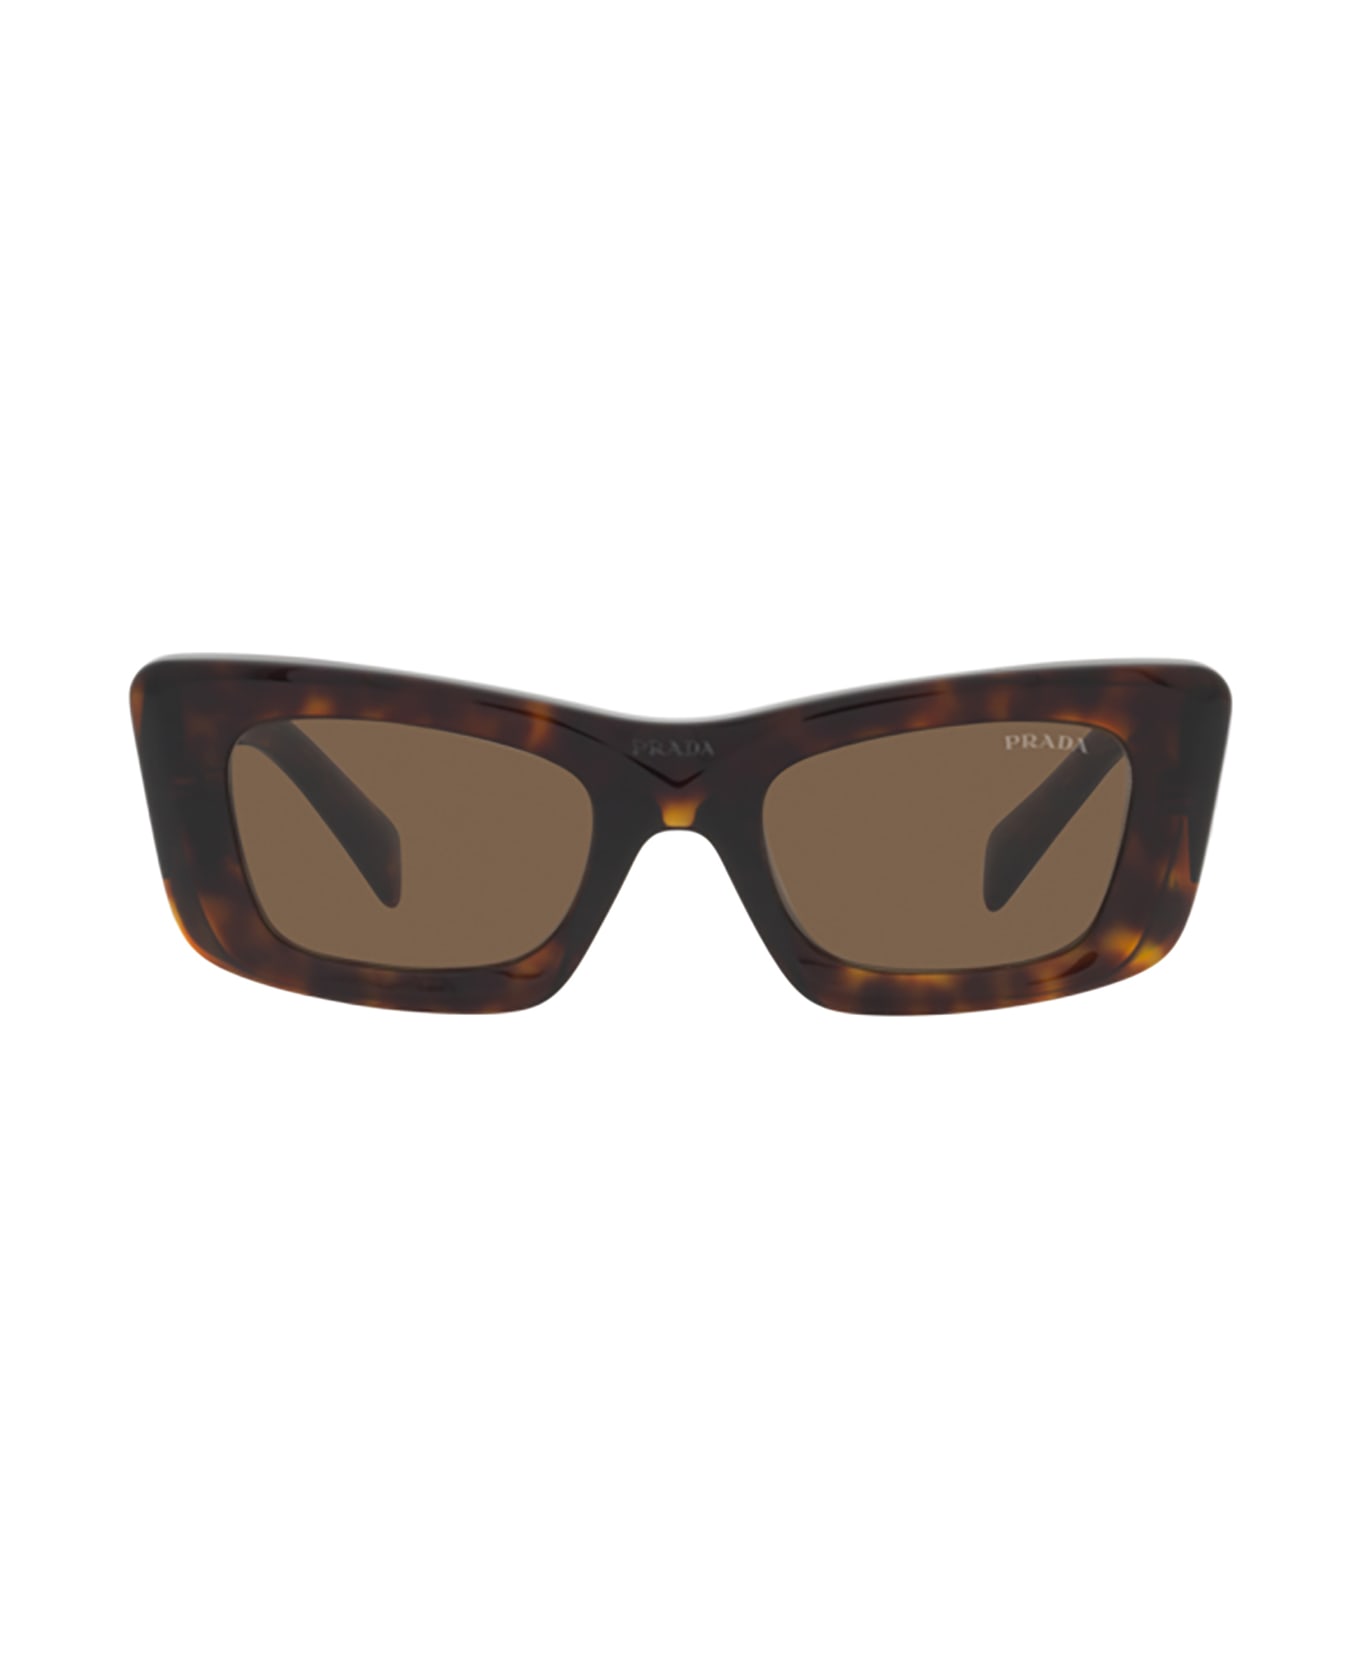 Prada Eyewear Pr 13zs Tortoise Sunglasses - Tortoise